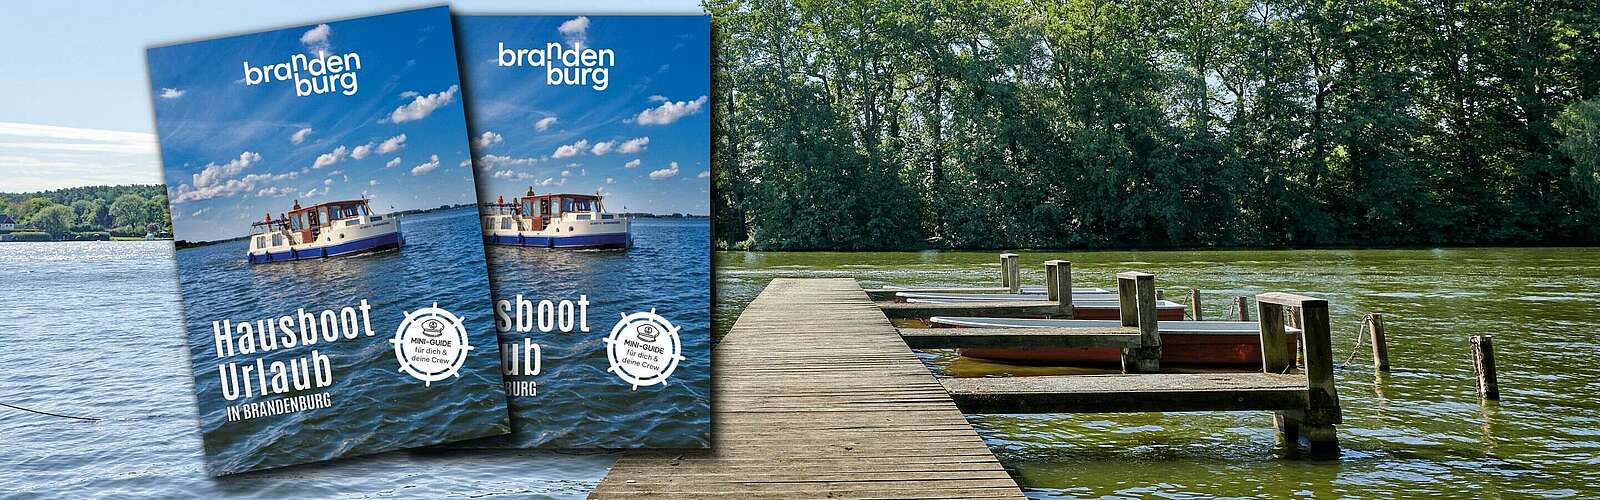 Hausboot Mini-Guide Header Holzsteg,
        
    

        Foto: TMB Fotoarchiv/Florian Trykowski